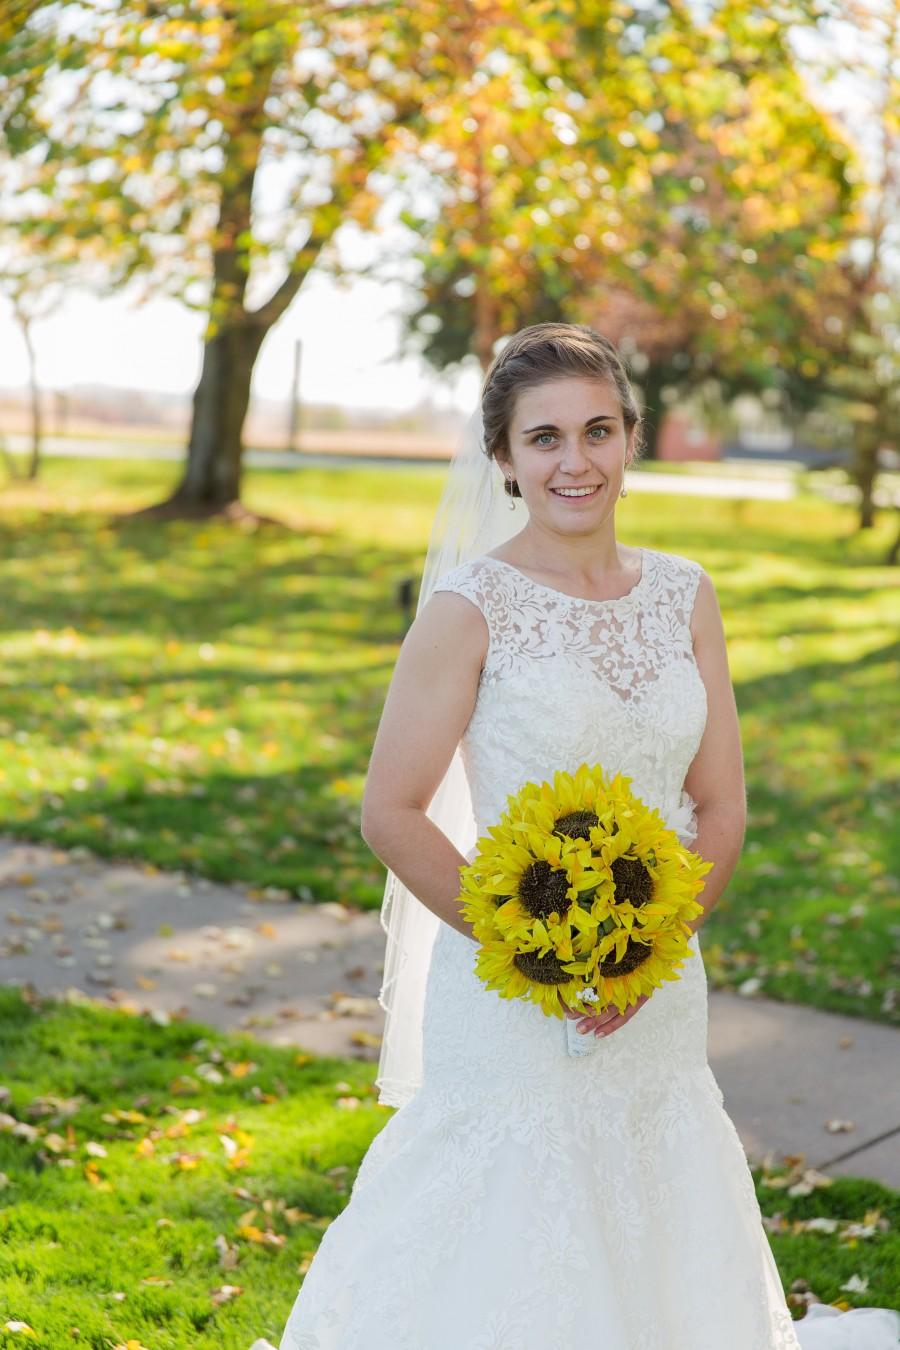 Mariage - Sunflower bridal bouquet! Wedding bouquet, bride bouquet, bouquet for wedding, sunflower, keepsake bouquet, sunflowers